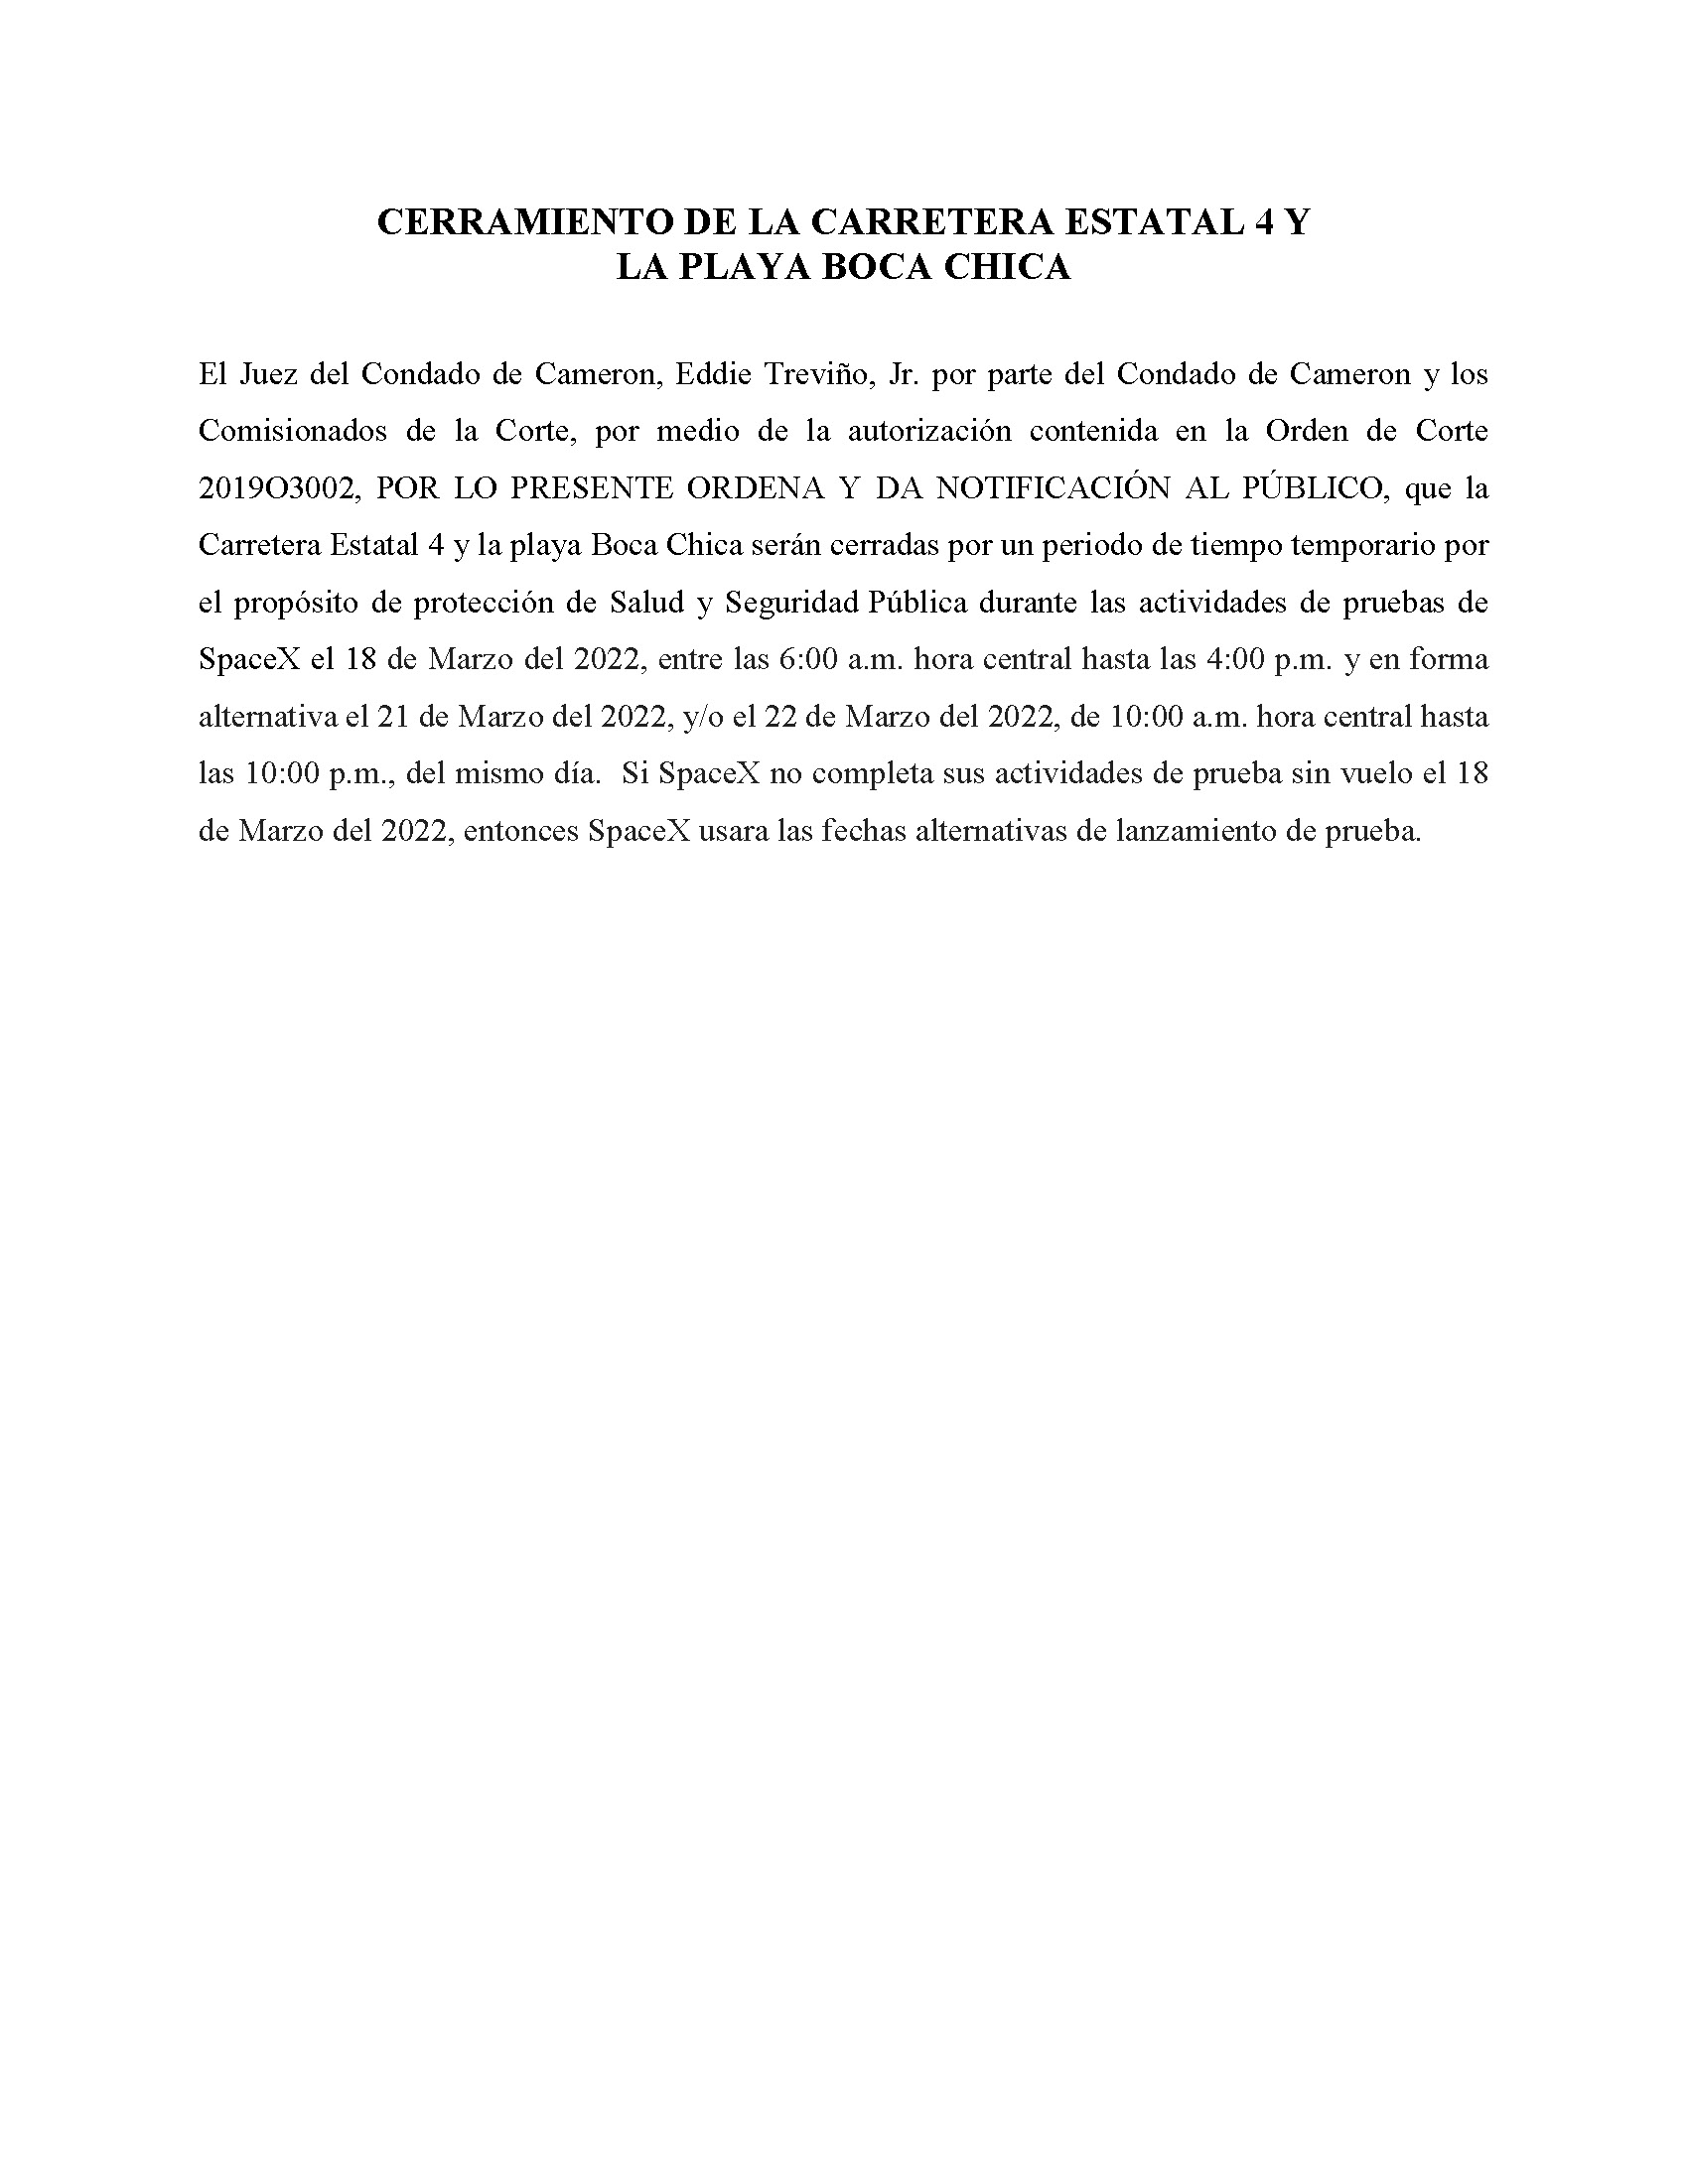 ORDER.CLOSURE OF HIGHWAY 4 Y LA PLAYA BOCA CHICA.SPANISH.03.18.2022